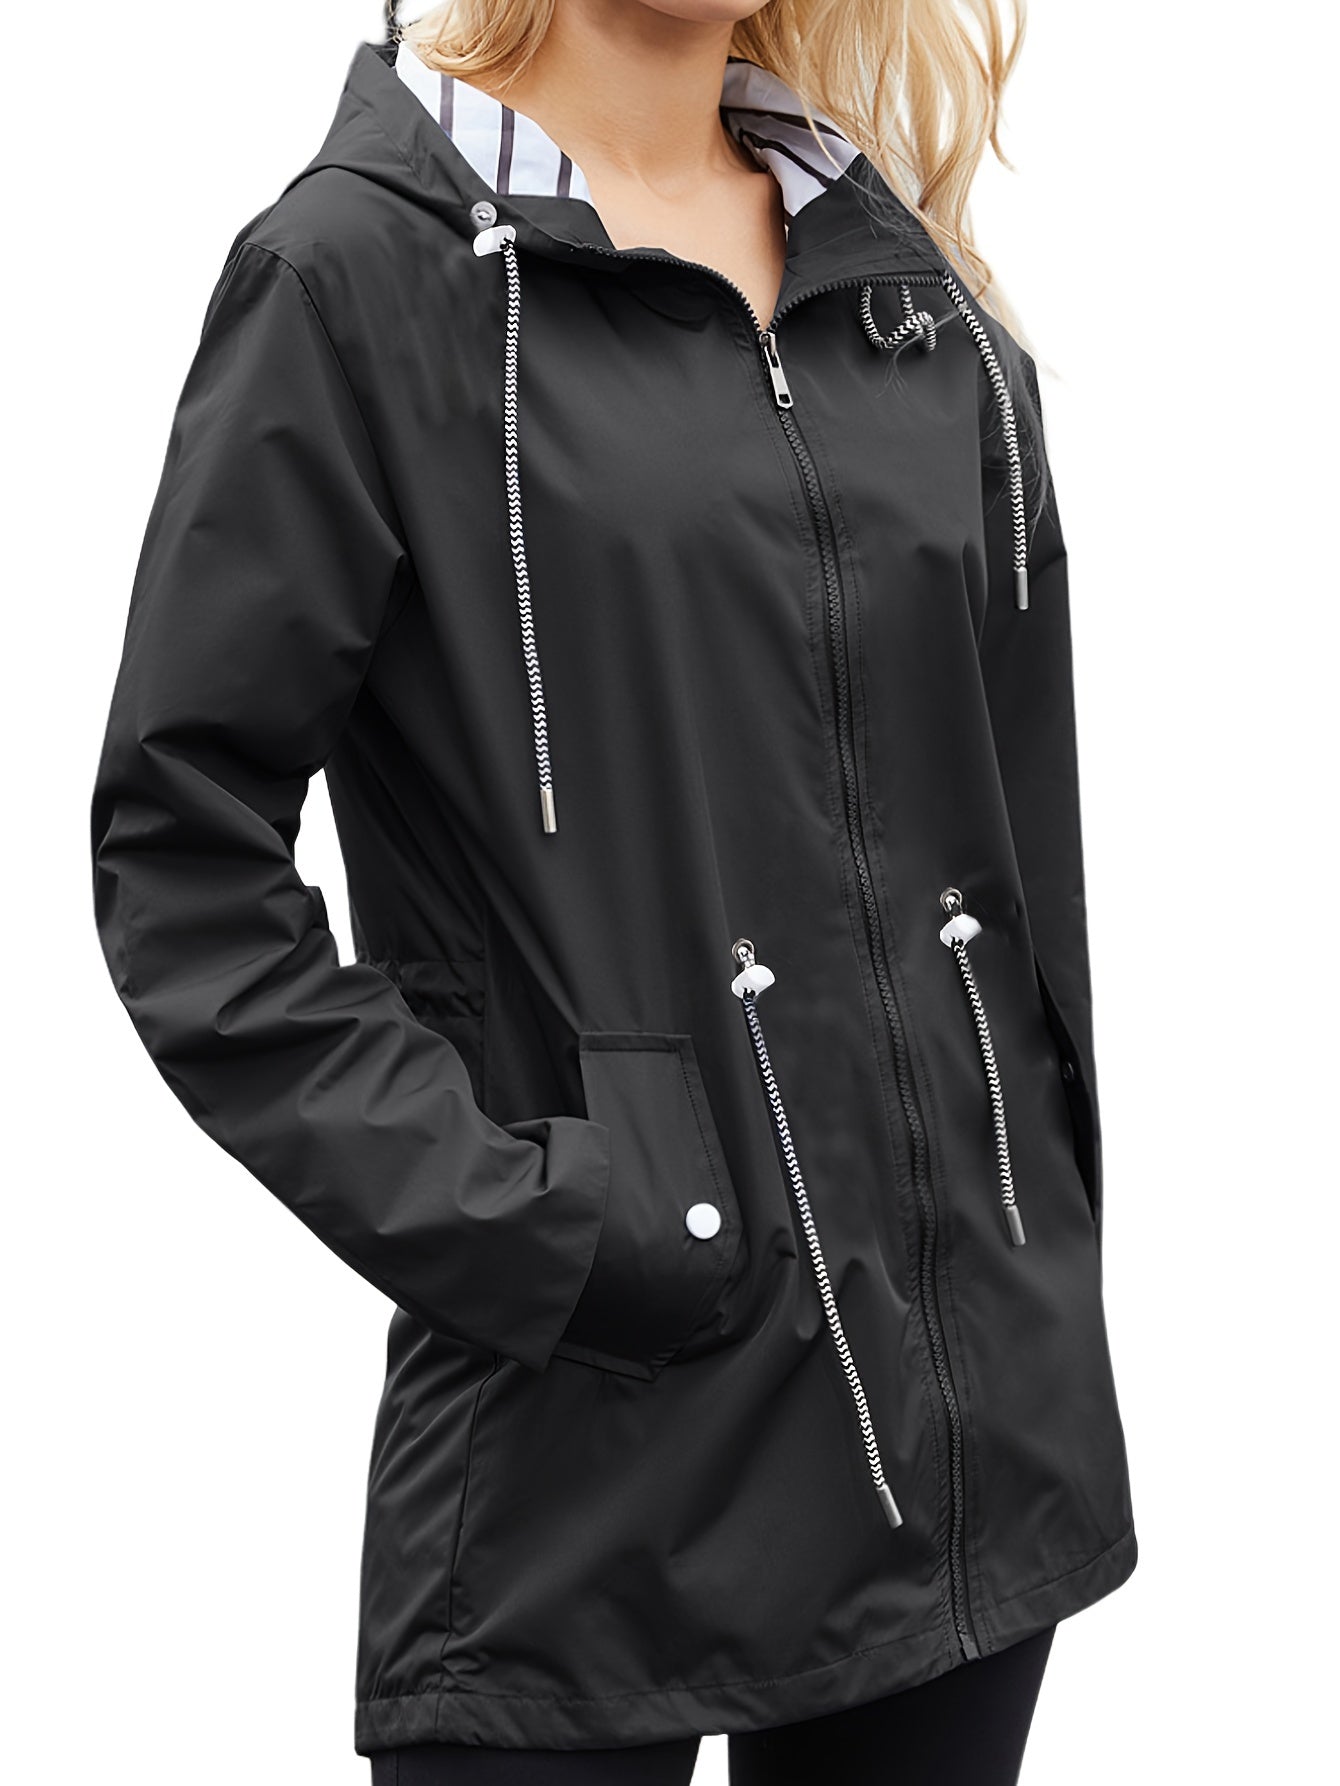 vlovelaw  Lightweight Waterproof Raincoats, Outdoor Hooded Windbreaker, Zip Up Drawstring Rain Jackets With Pockets, Women's Clothing